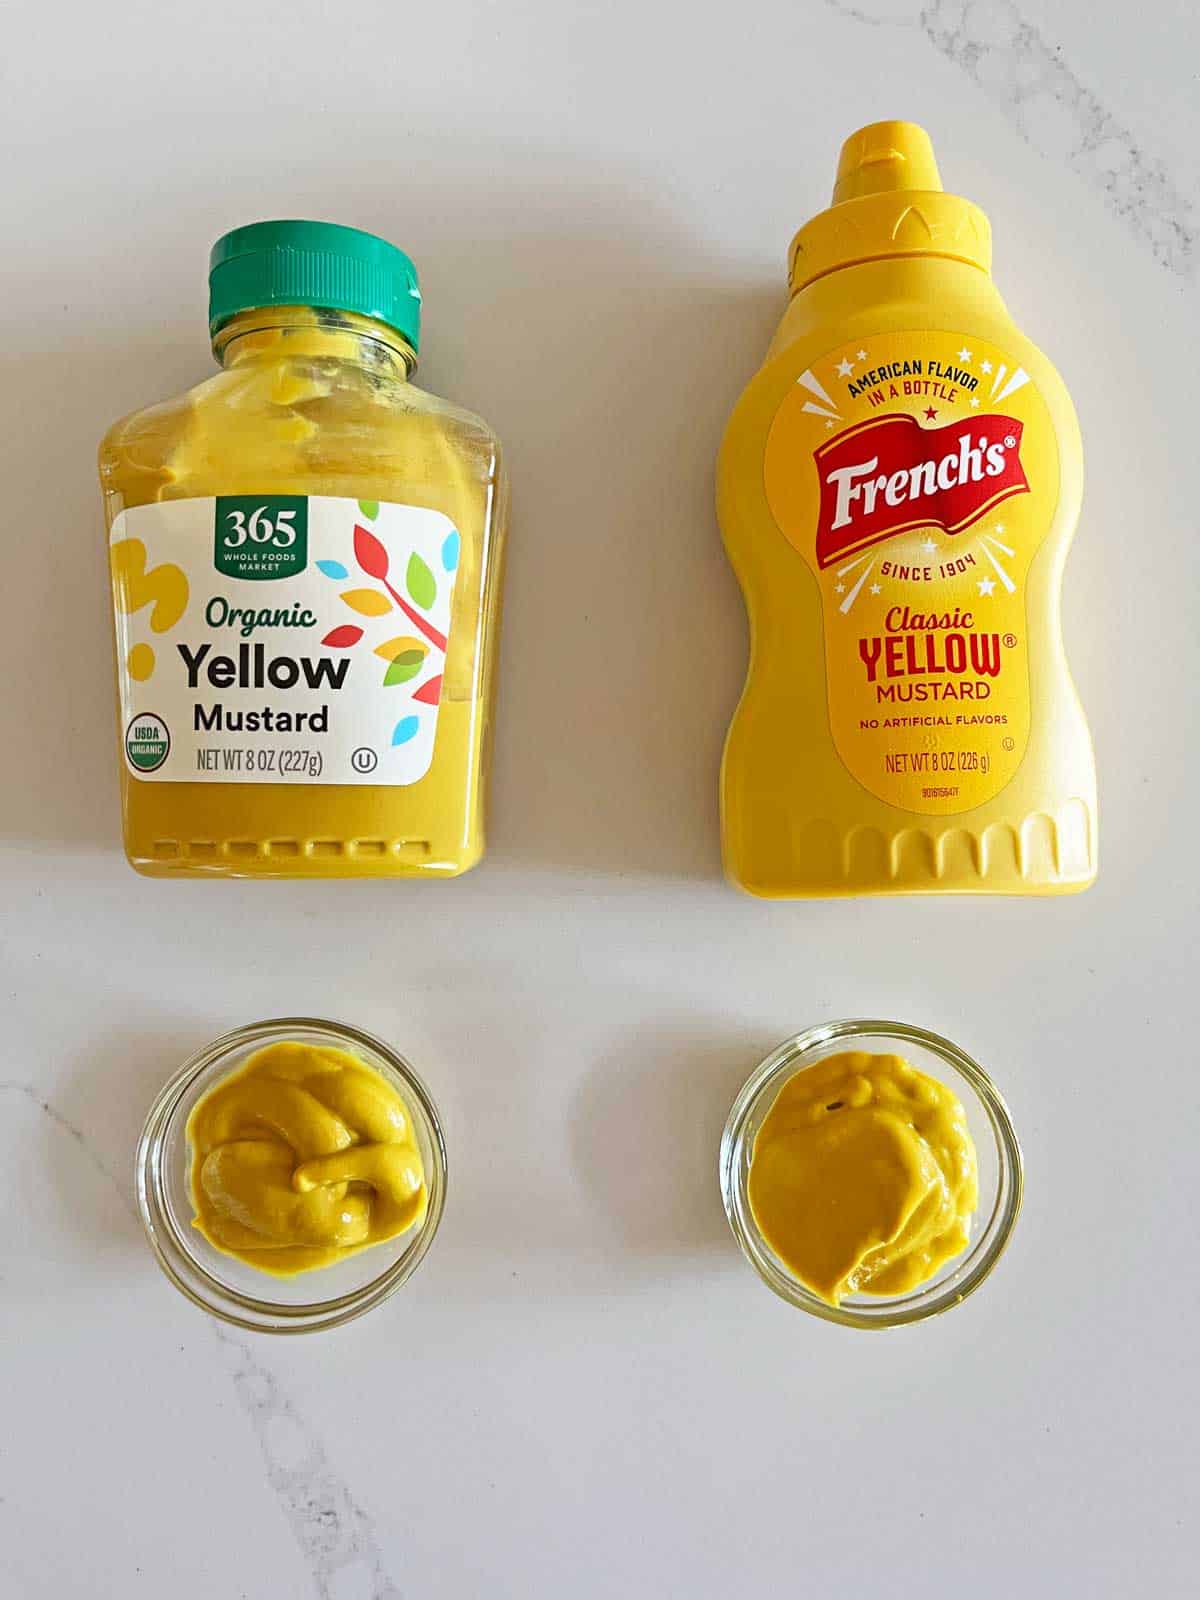 French's yellow mustard next to a store brand yellow mustard.